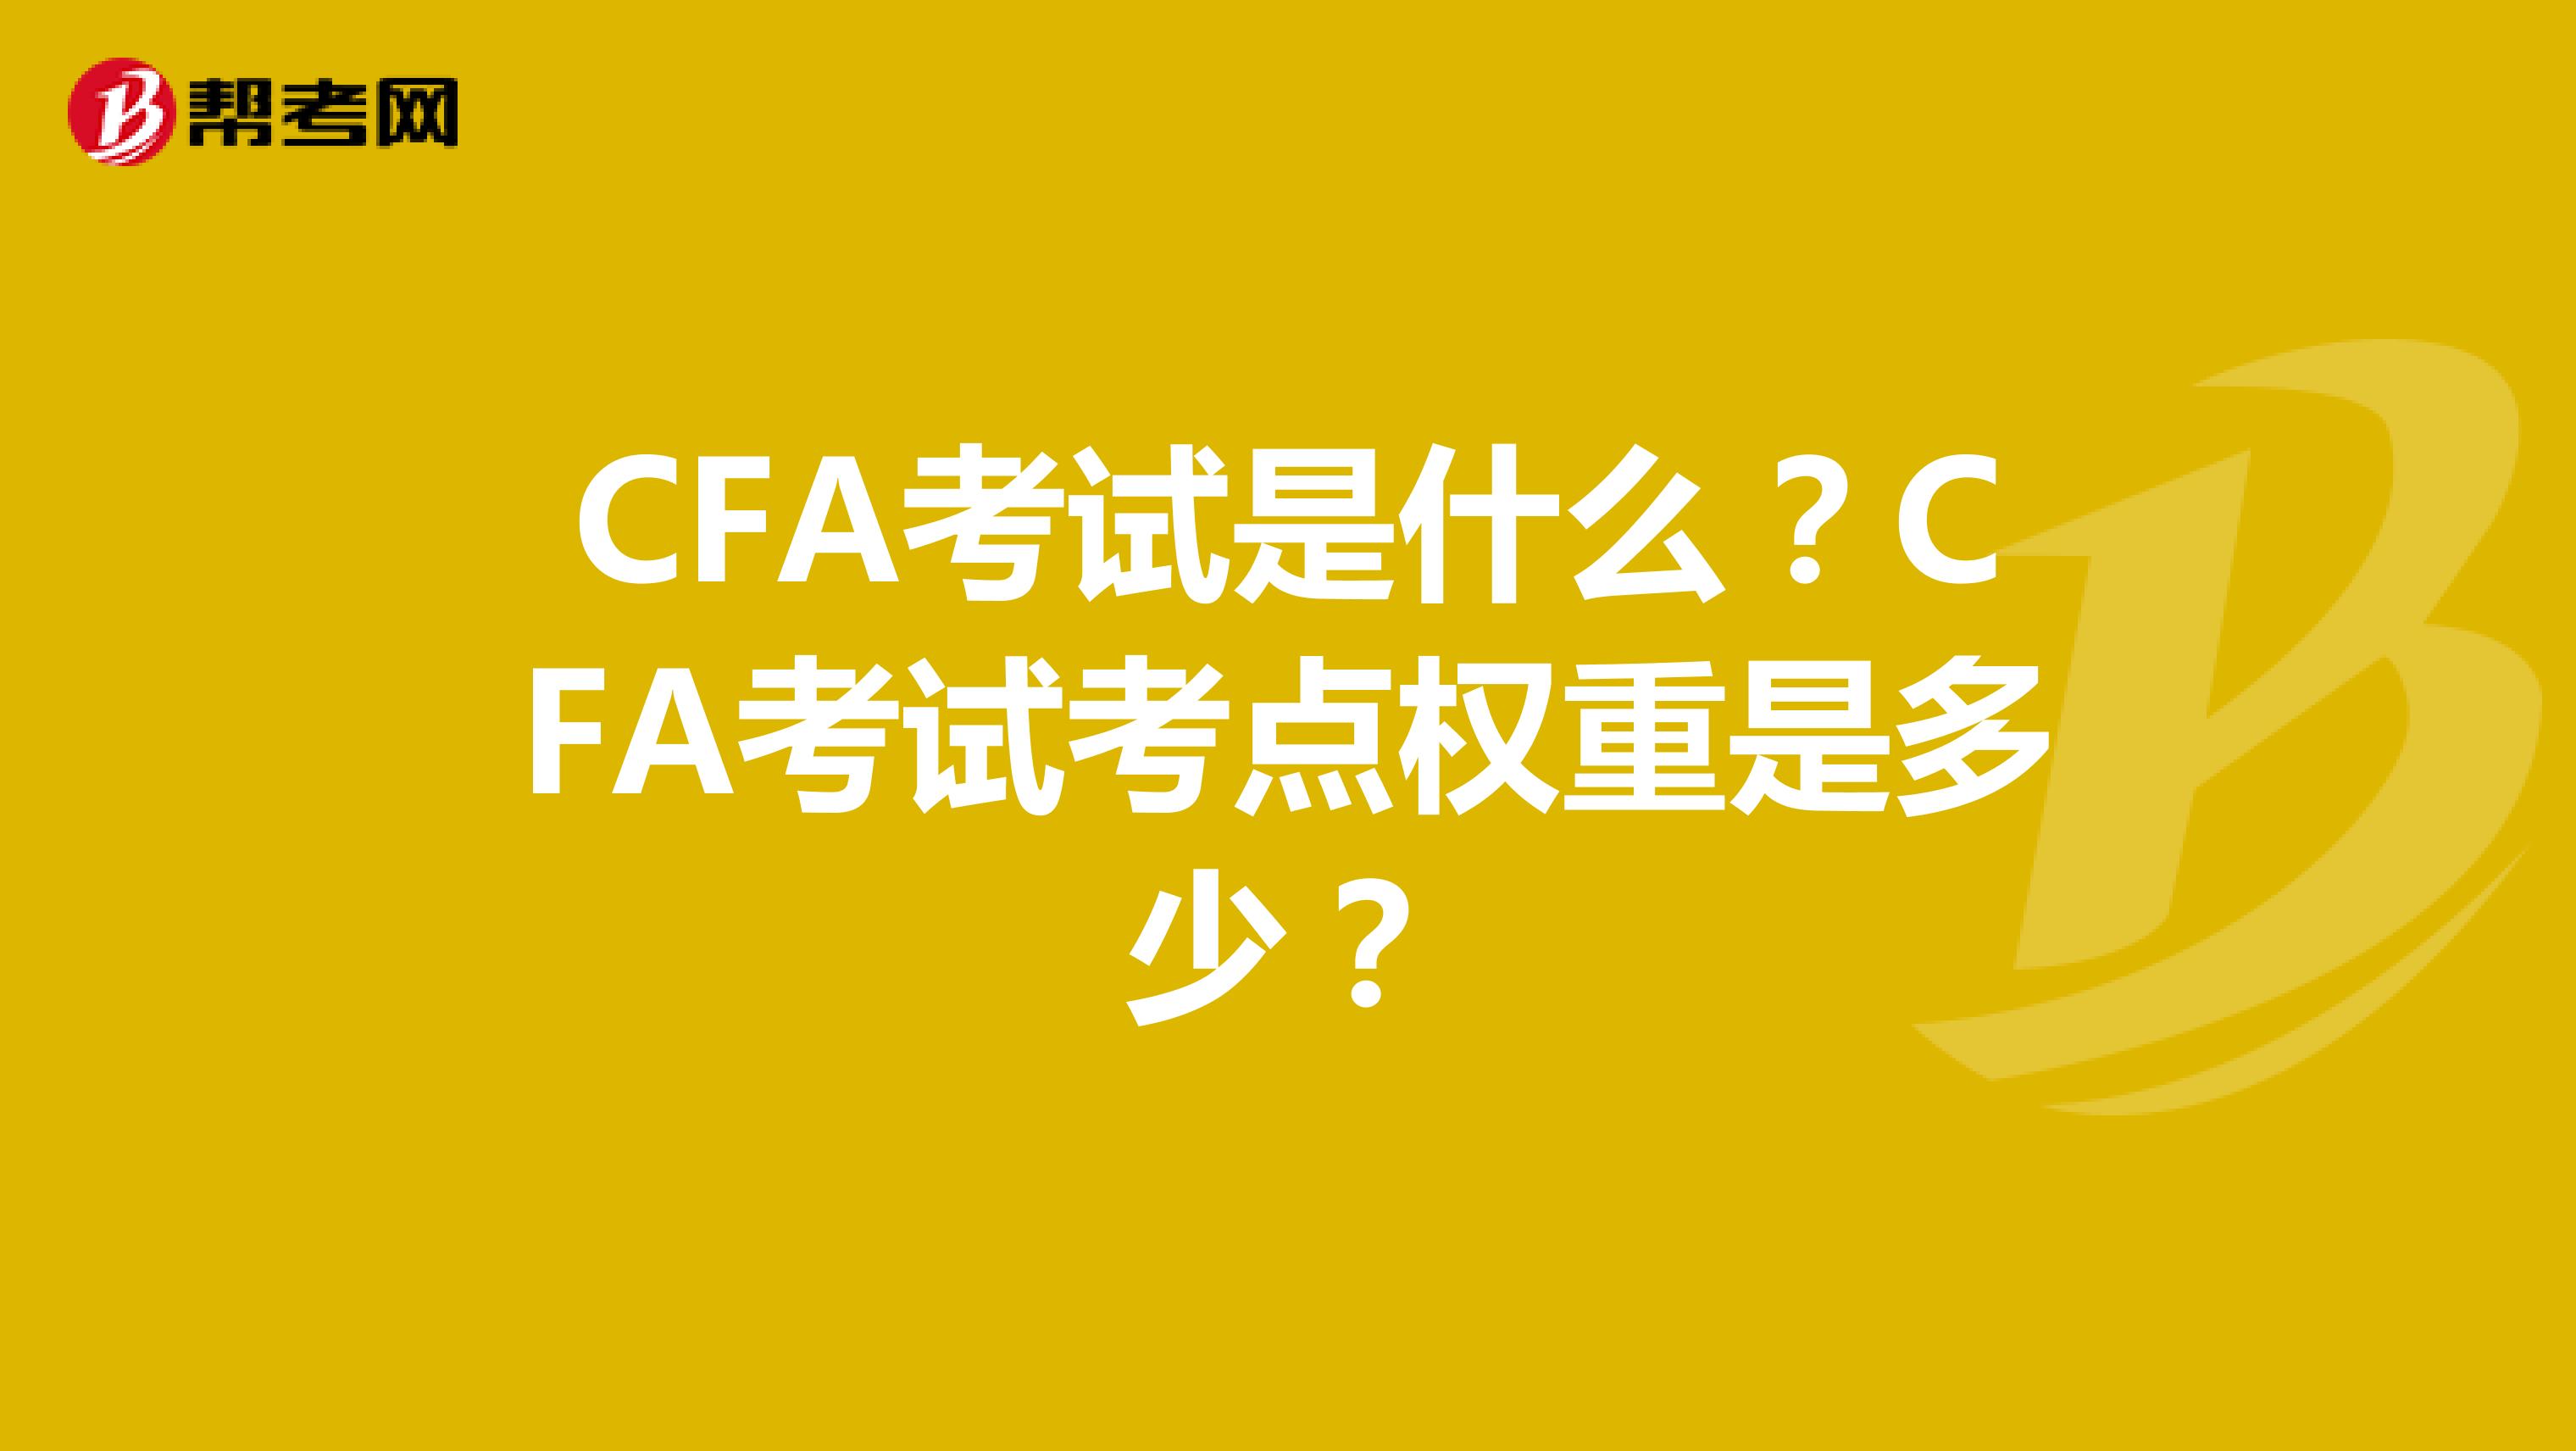 CFA考試是什么？CFA考試考點權重是多少？